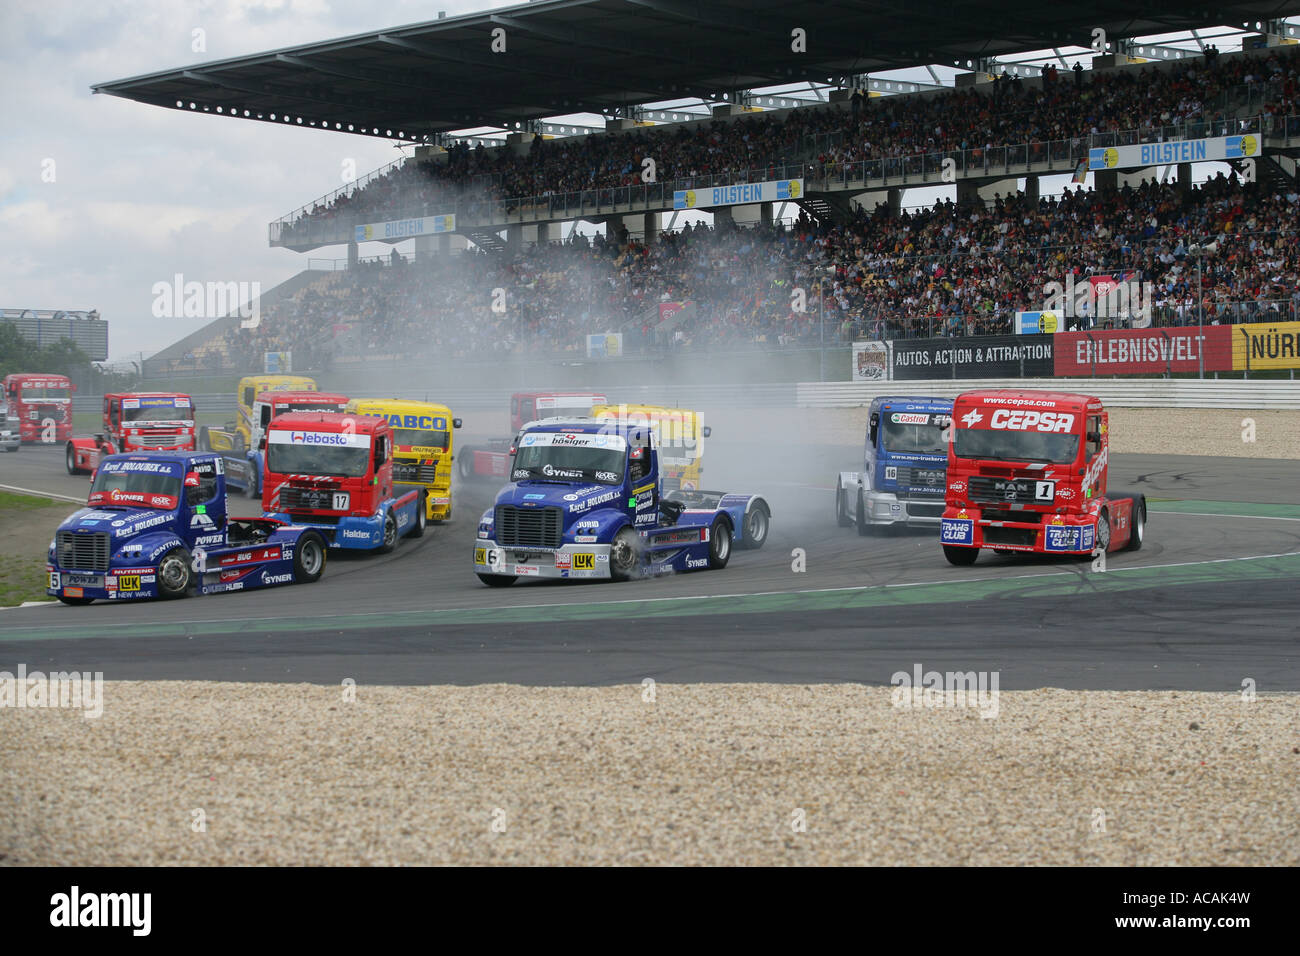 ADAC-Truck-Grand-Prix 2007 at the Nuerburgring near Adenau Rhineland-Palatinate Germany Europe Stock Photo